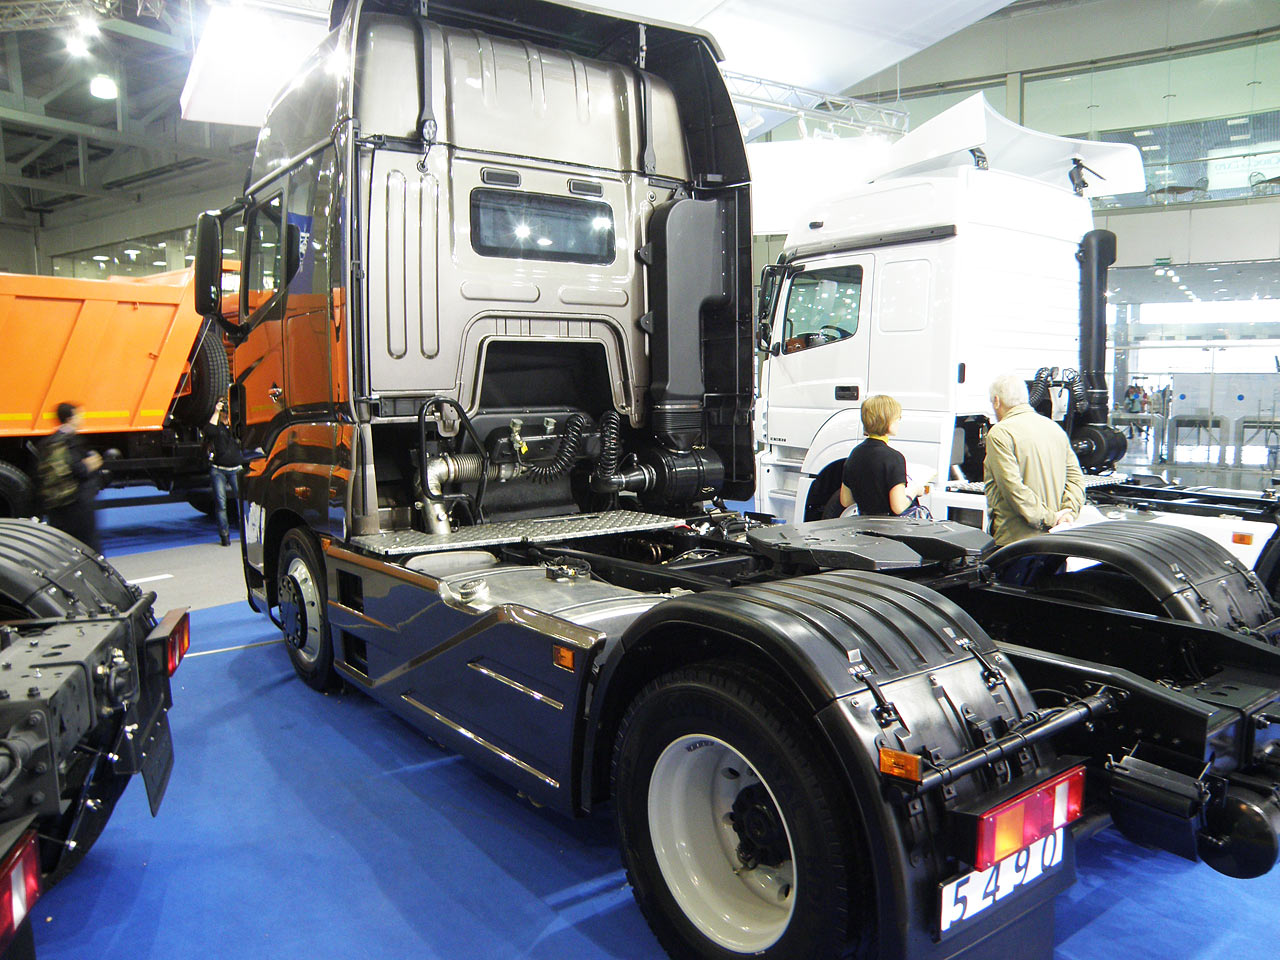 KamAZ 5490 with DMEC cab (Concept vehicles) - Trucksplanet